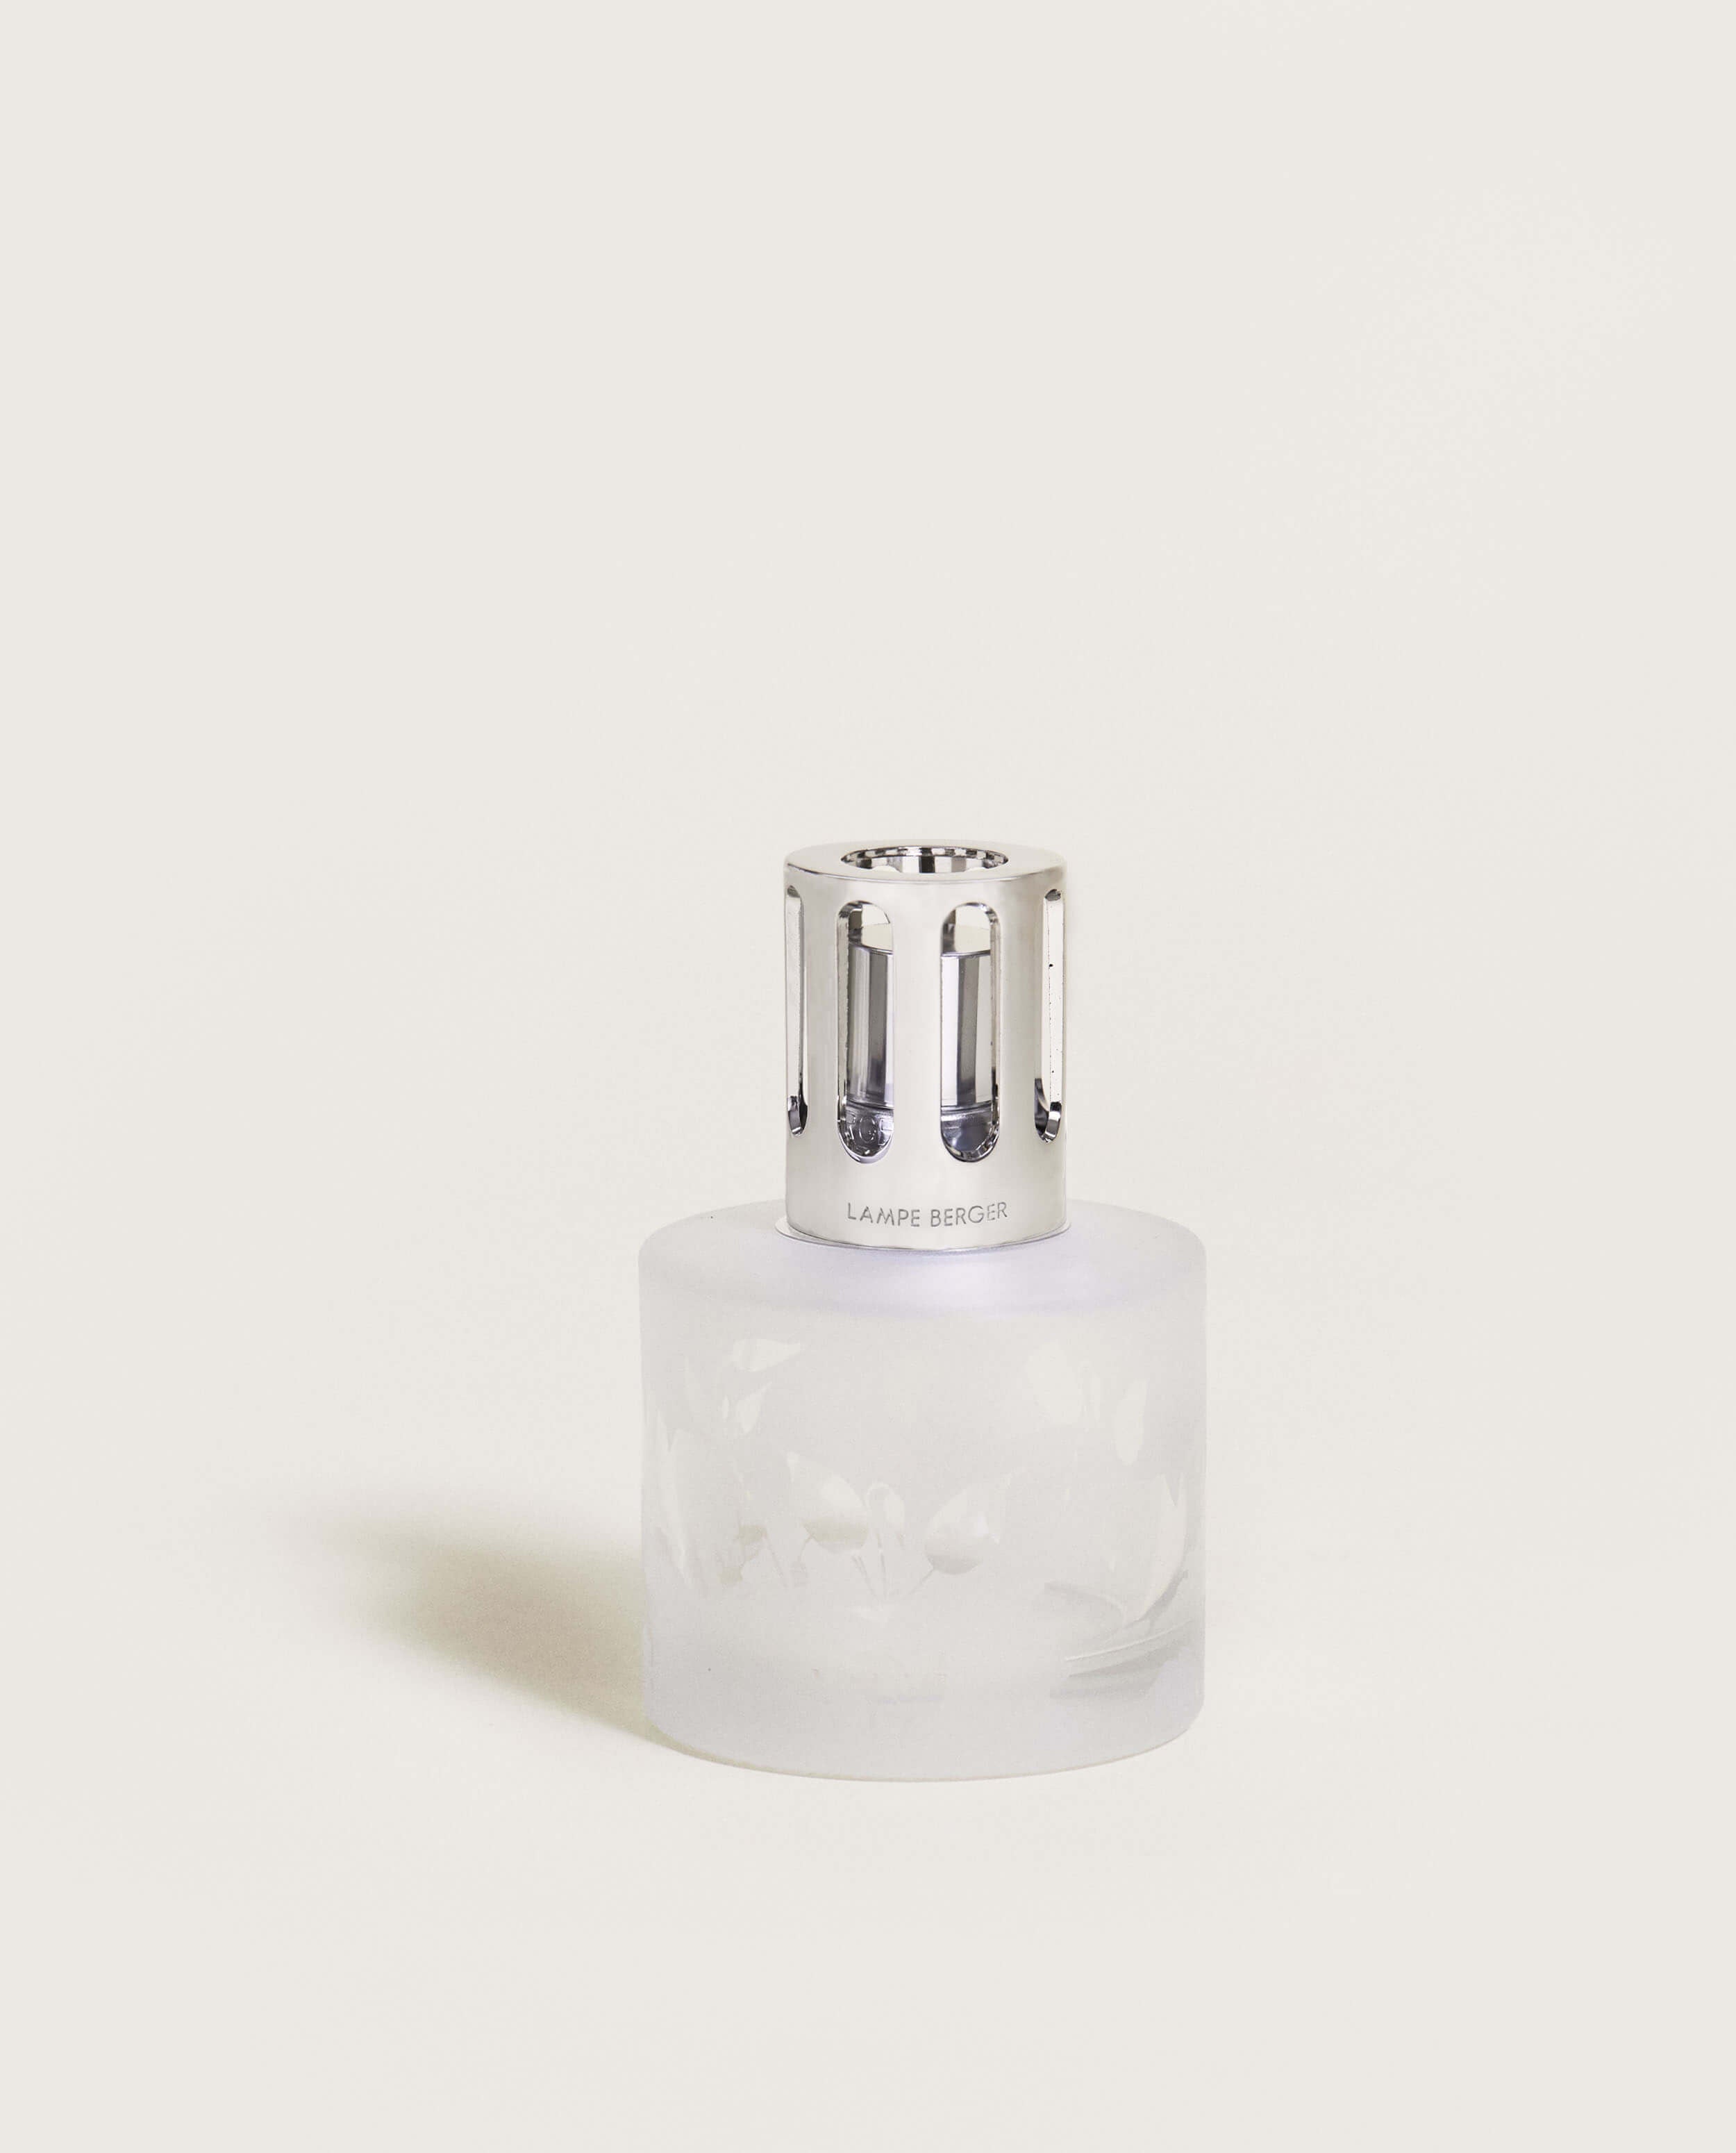 Ambientador Lampe Berger Parfum de Maison LAMPE BERGER Jasmin Pr?cieux 500ml